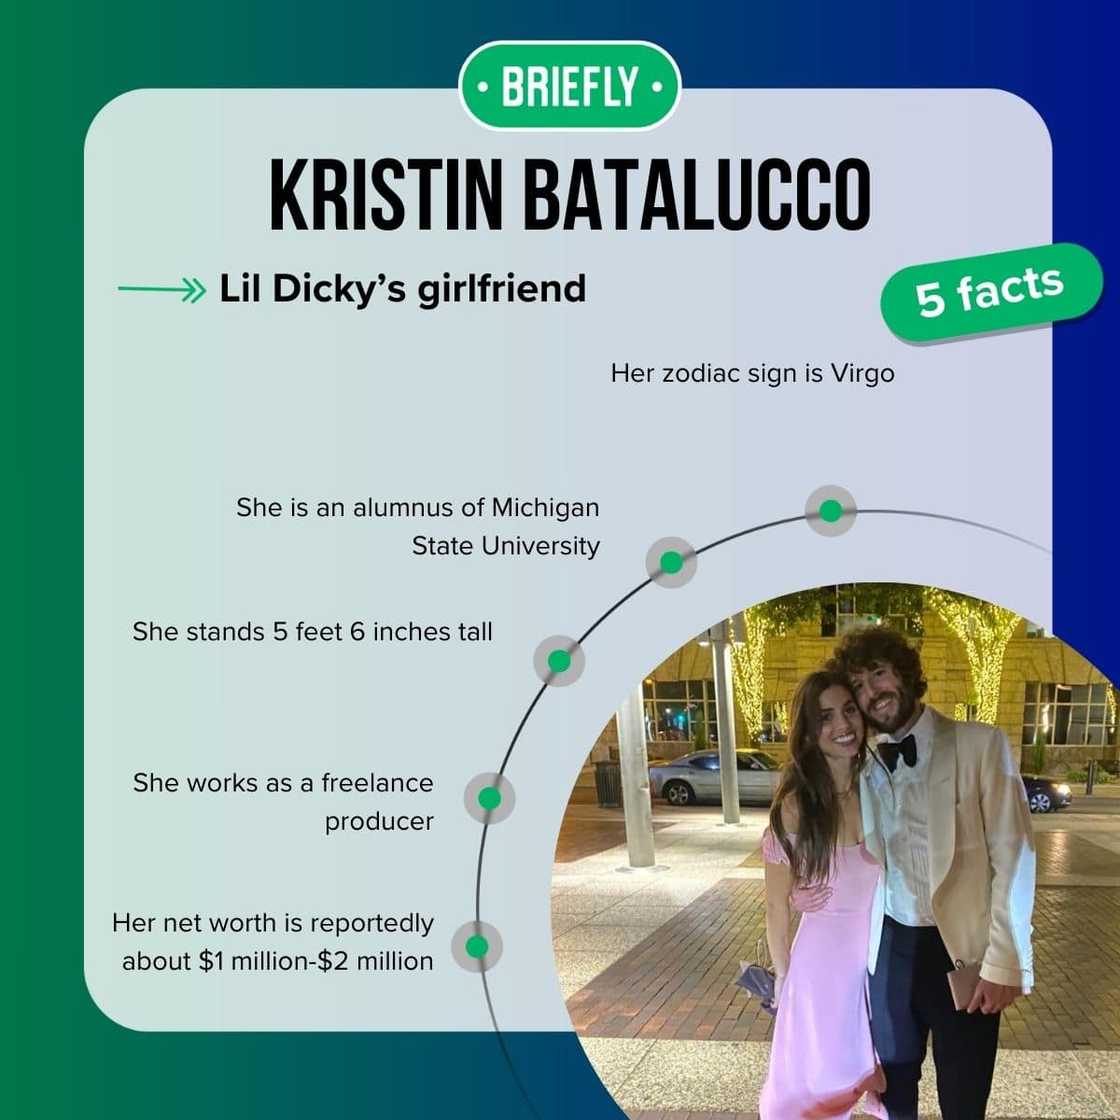 Kristin Batalucco's facts